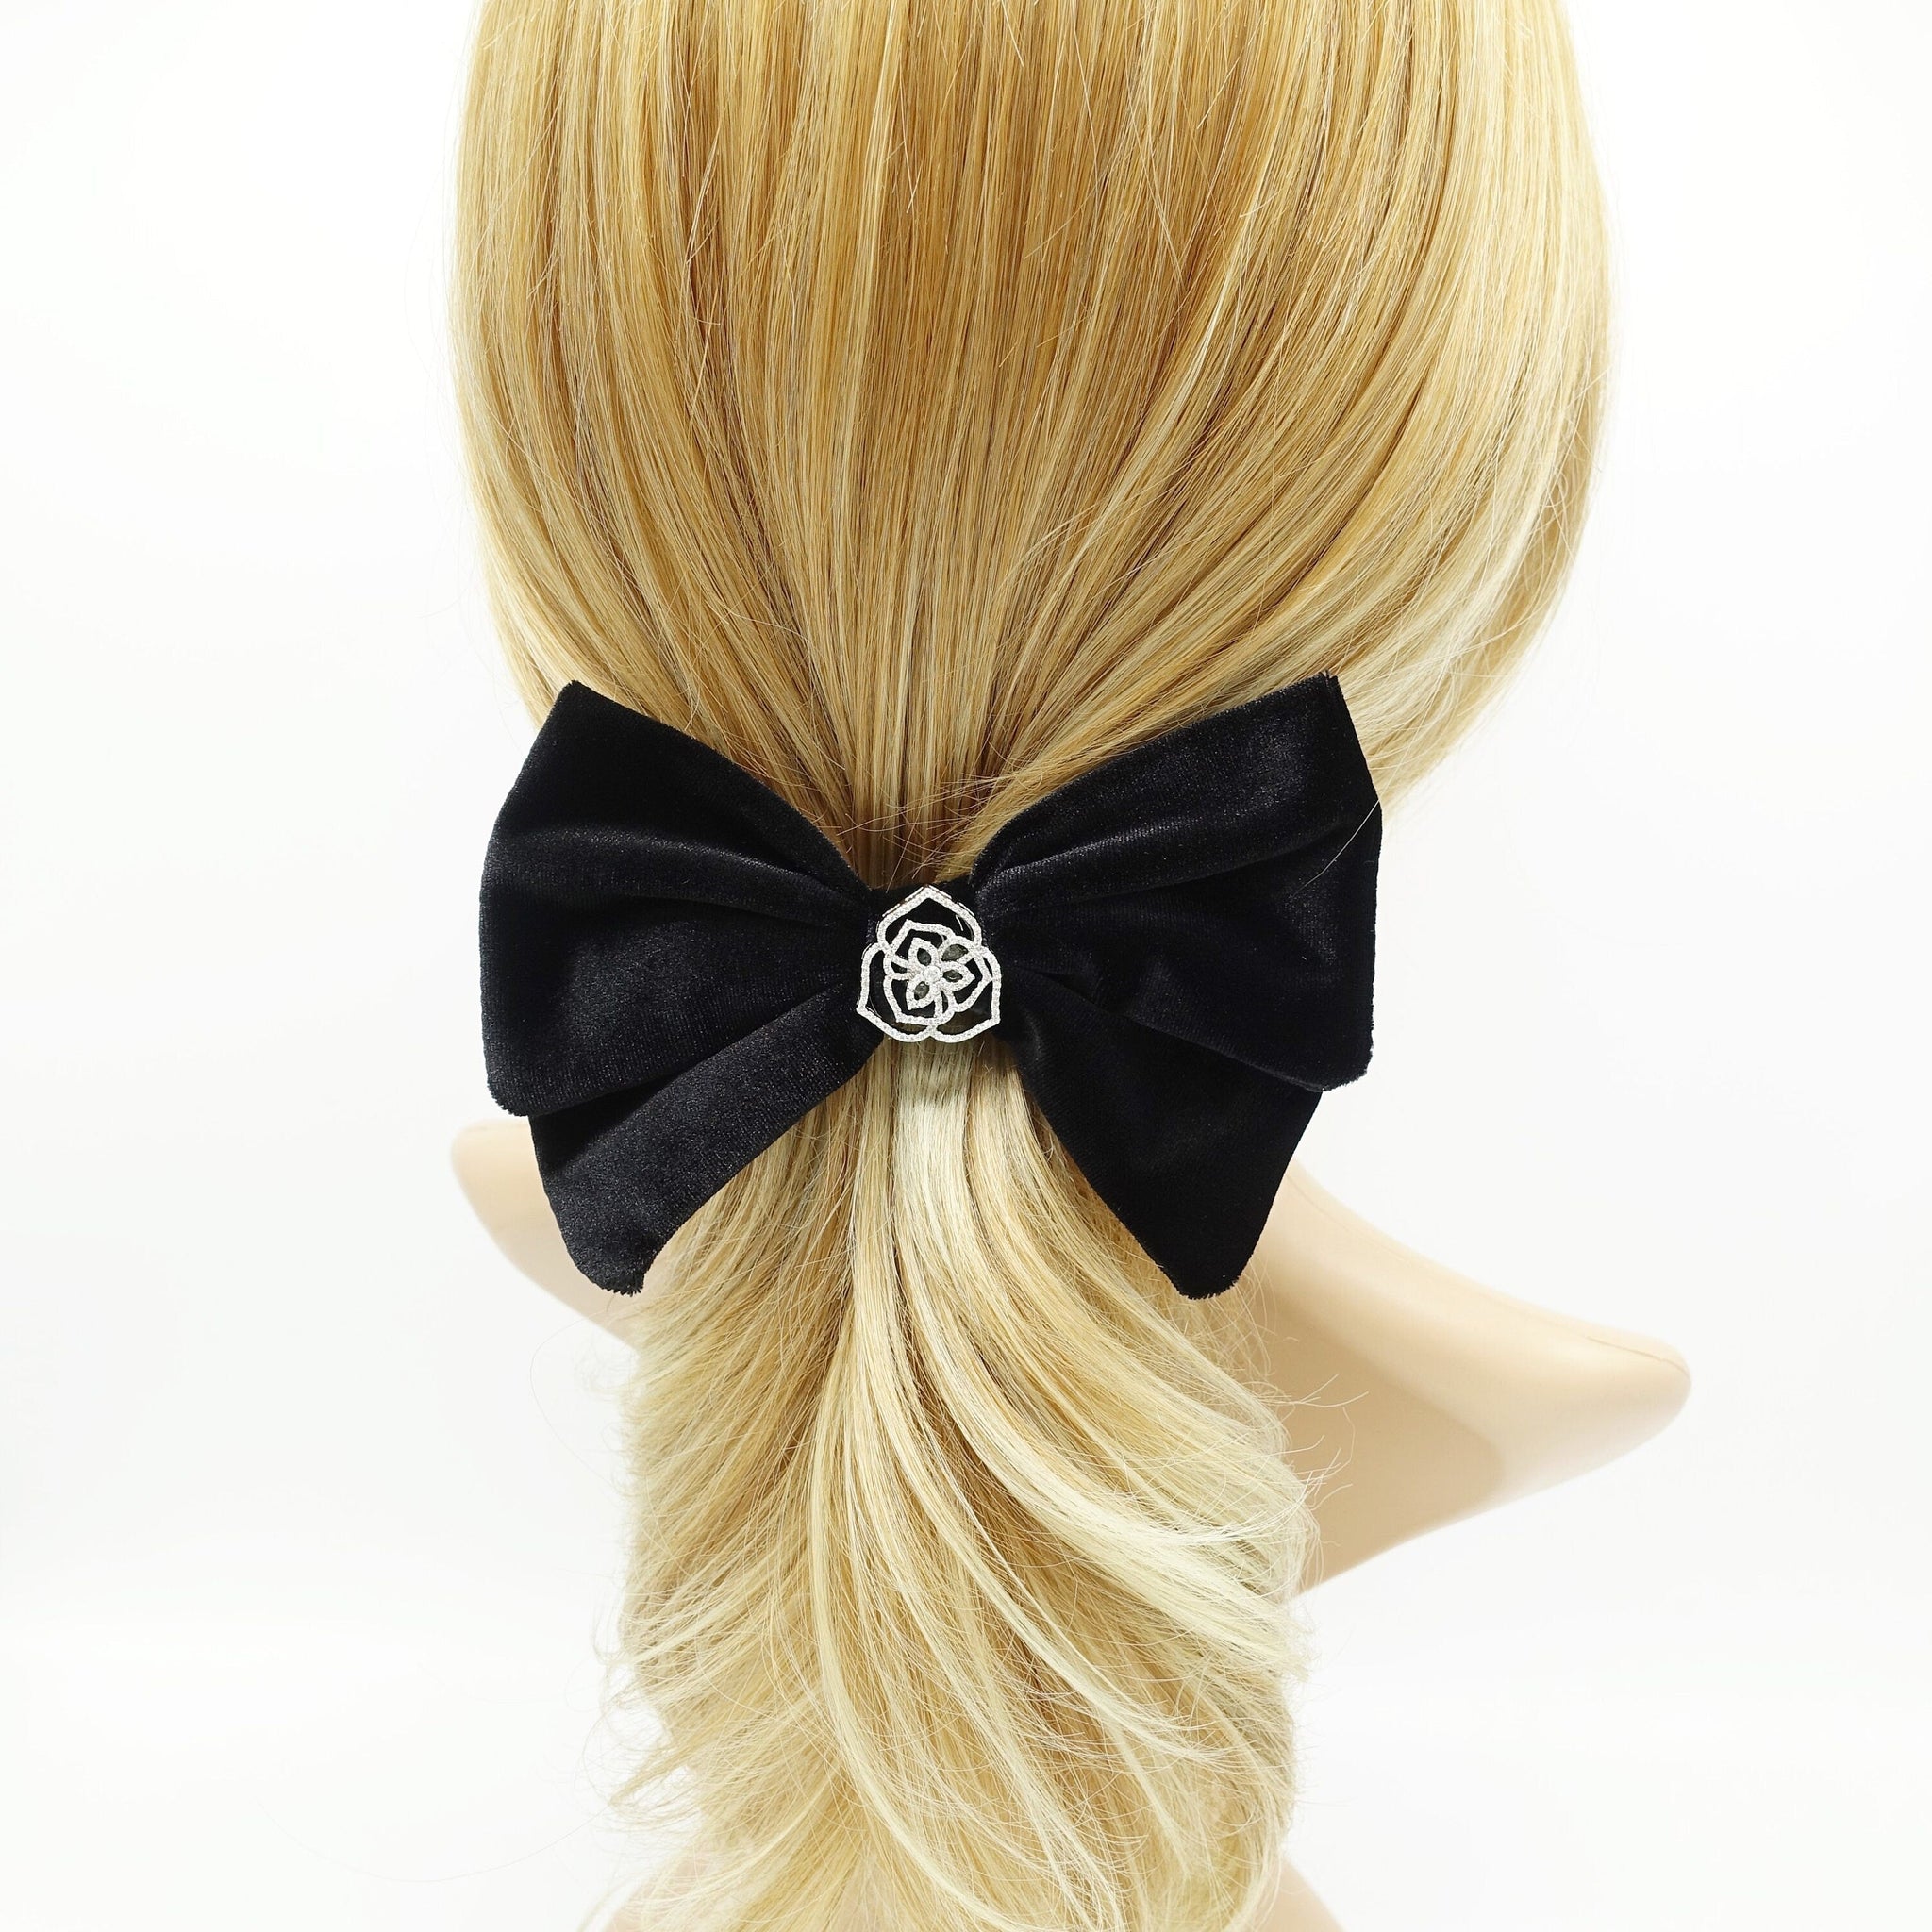 veryshine.com Barrette (Bow) Camelia black velvet hair bow rhinestone casting embellished bling hair accessory for women